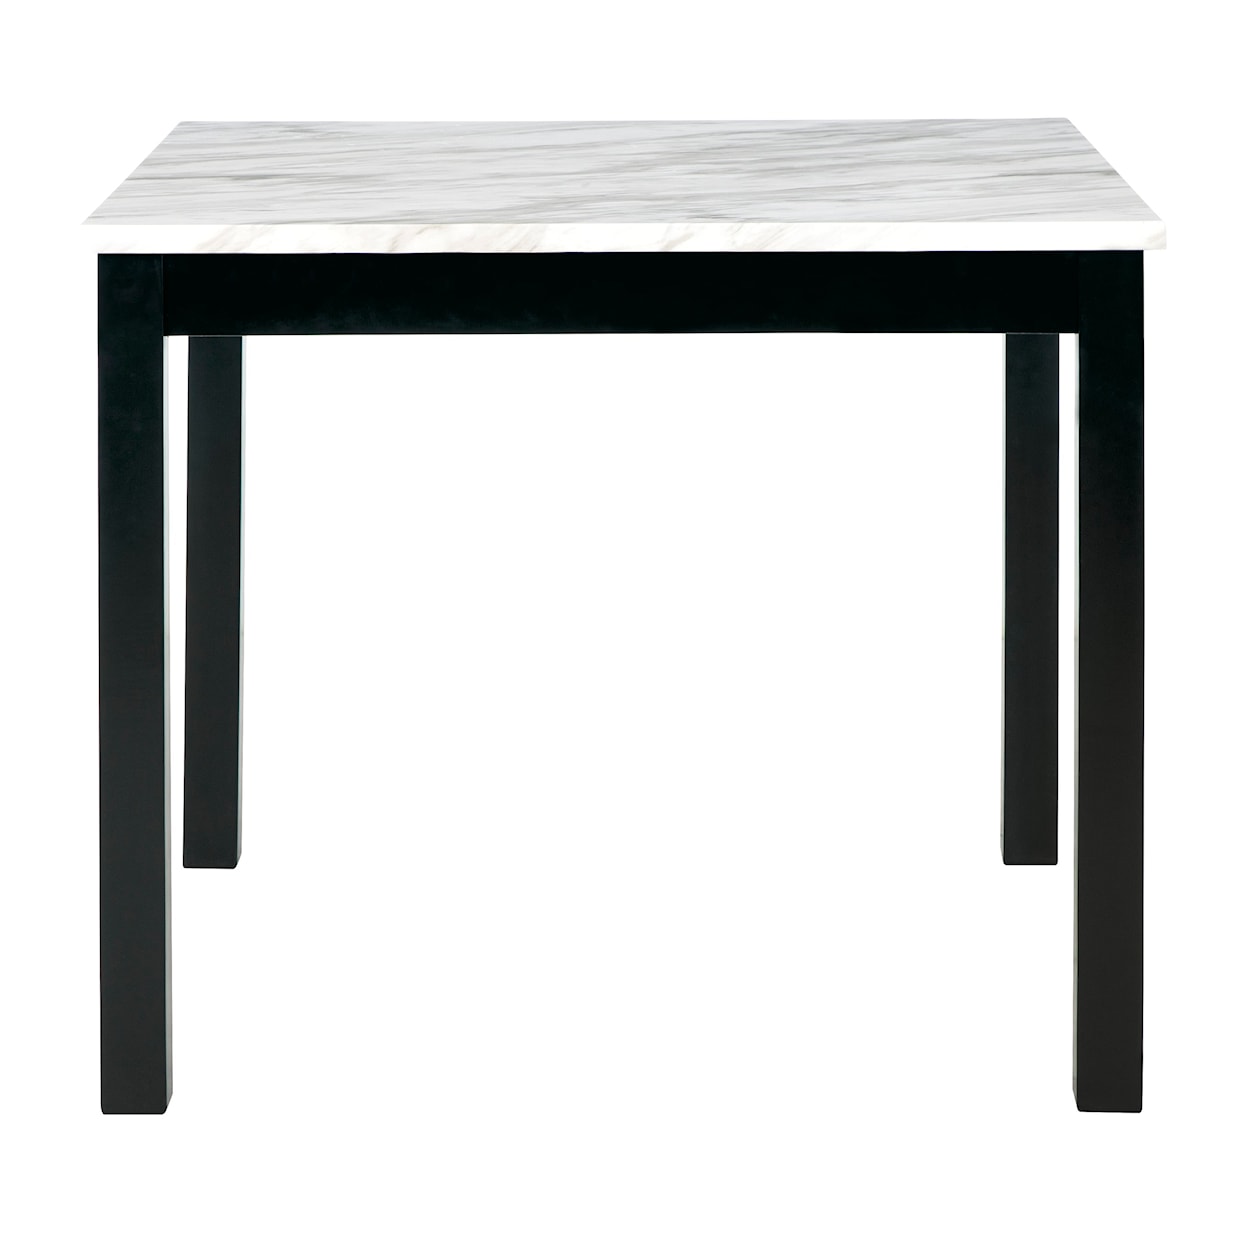 Signature Design Cranderlyn 5-Piece Counter Dining Table Set